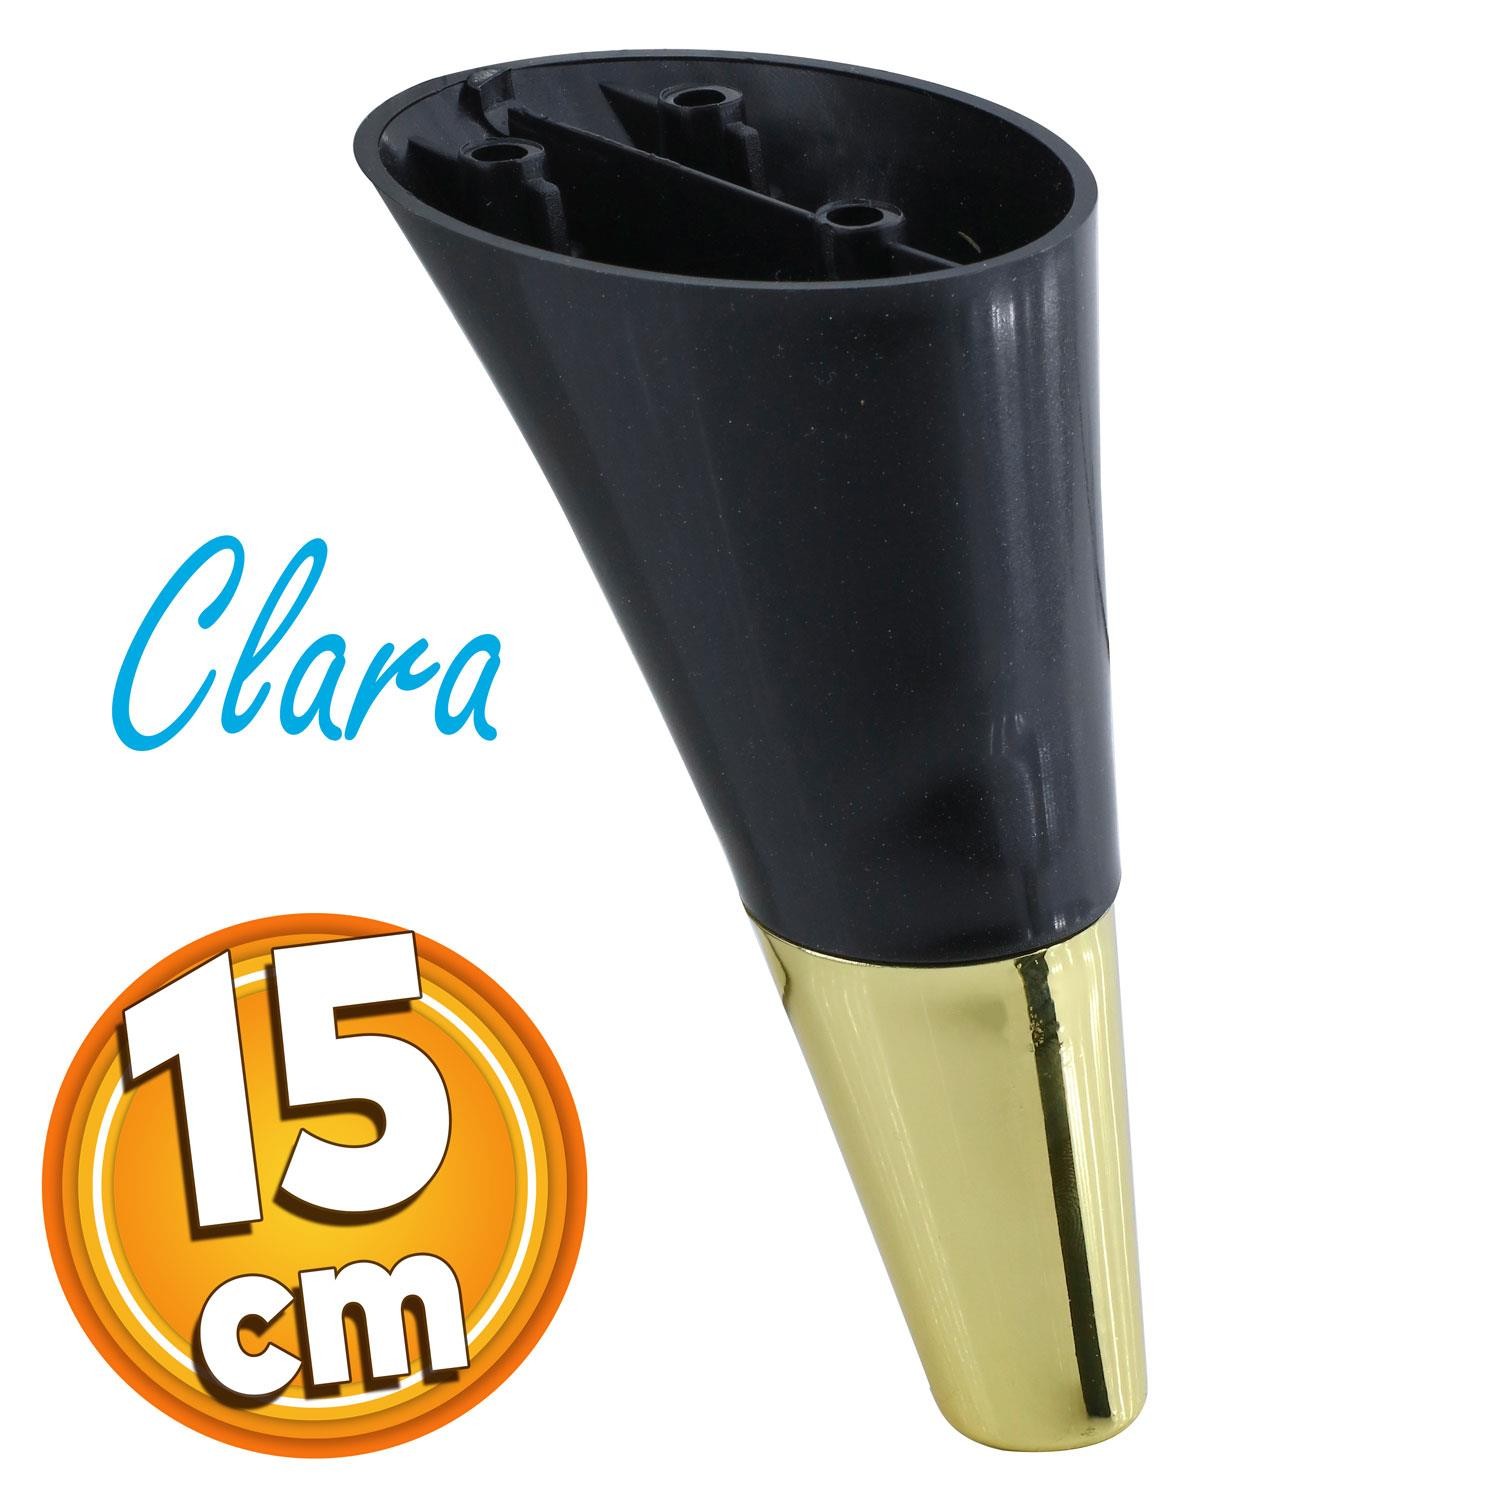 Clara Mobilya Kanepe Sehpa TV Ünitesi Baza Koltuk Ayağı Siyah Gold Renk 15 cm Ayak